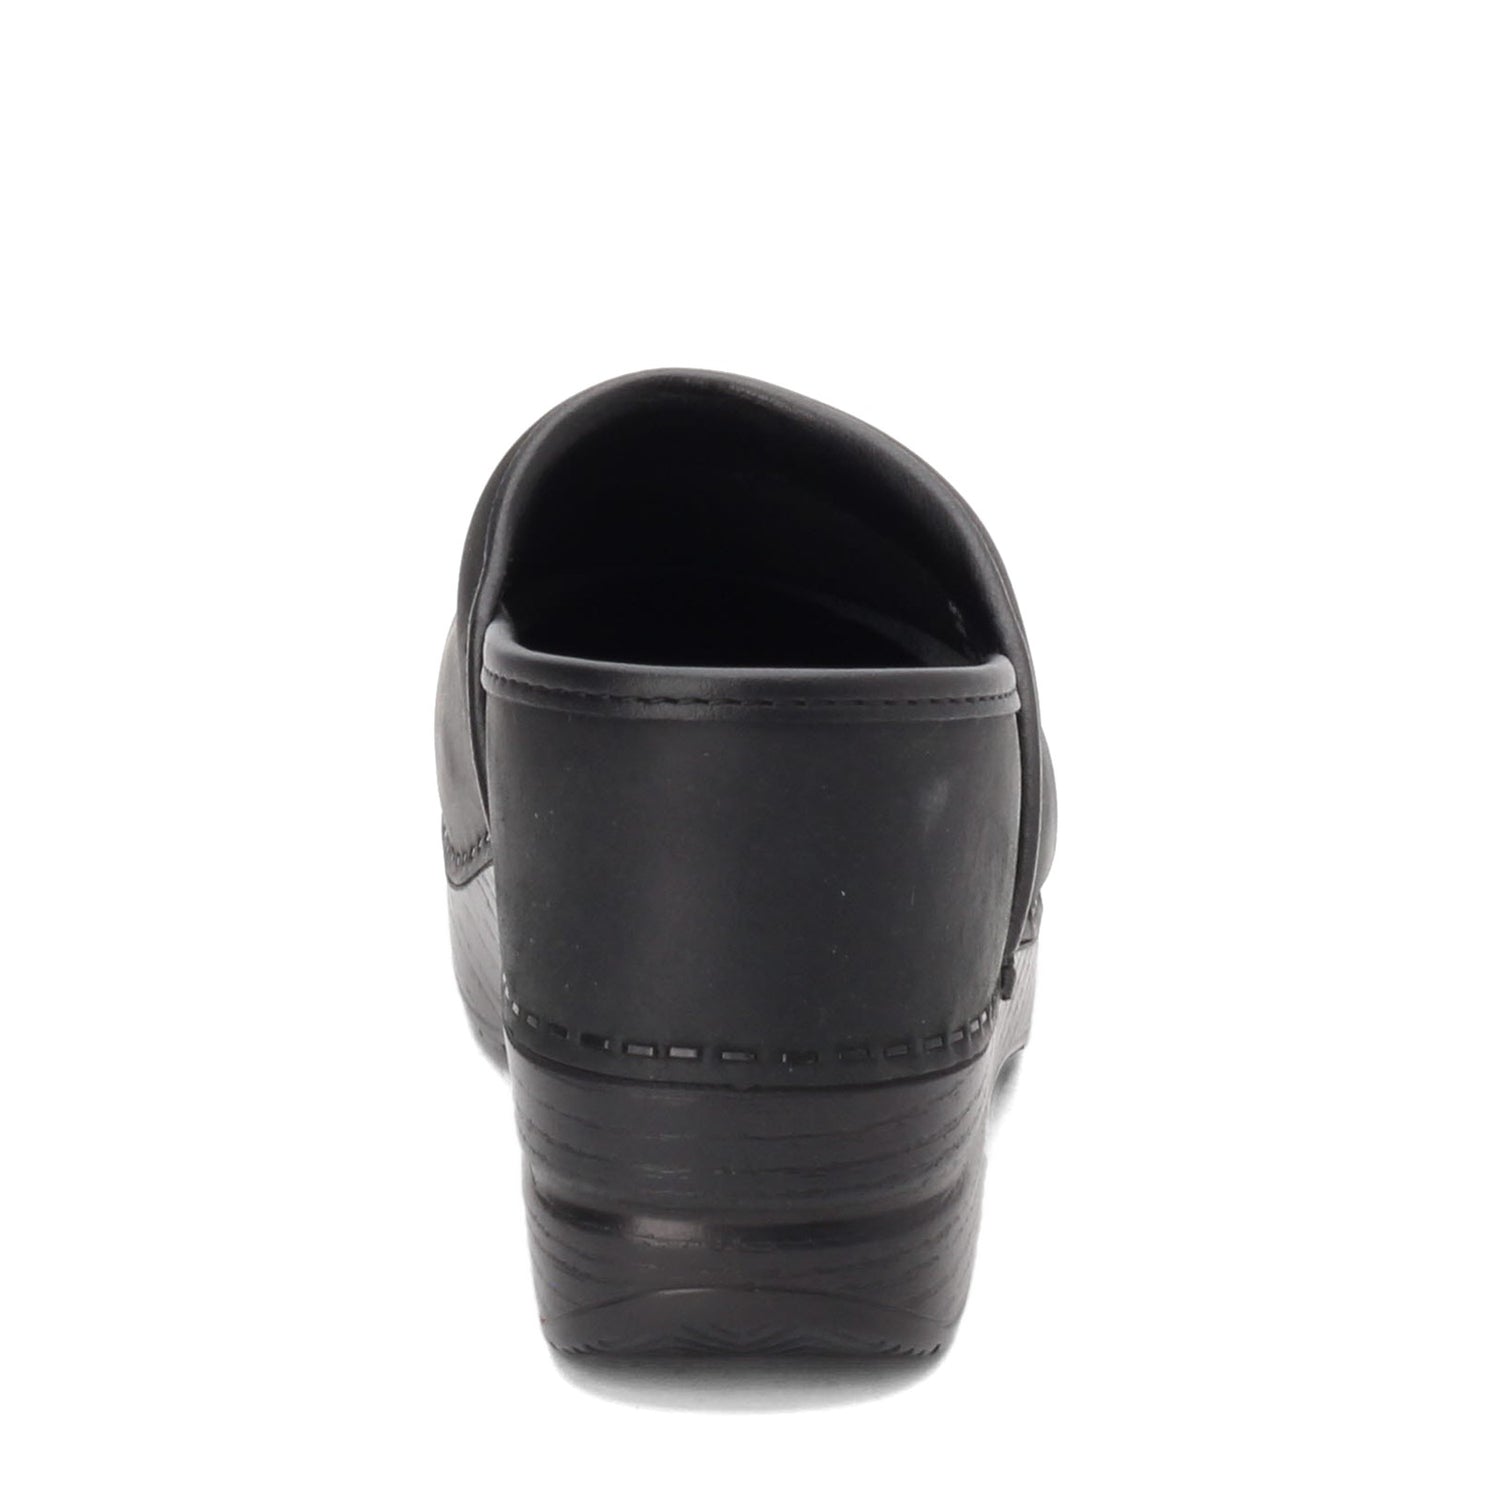 Peltz Shoes  Women's Dansko Professional Clog Black Oiled 206-020202